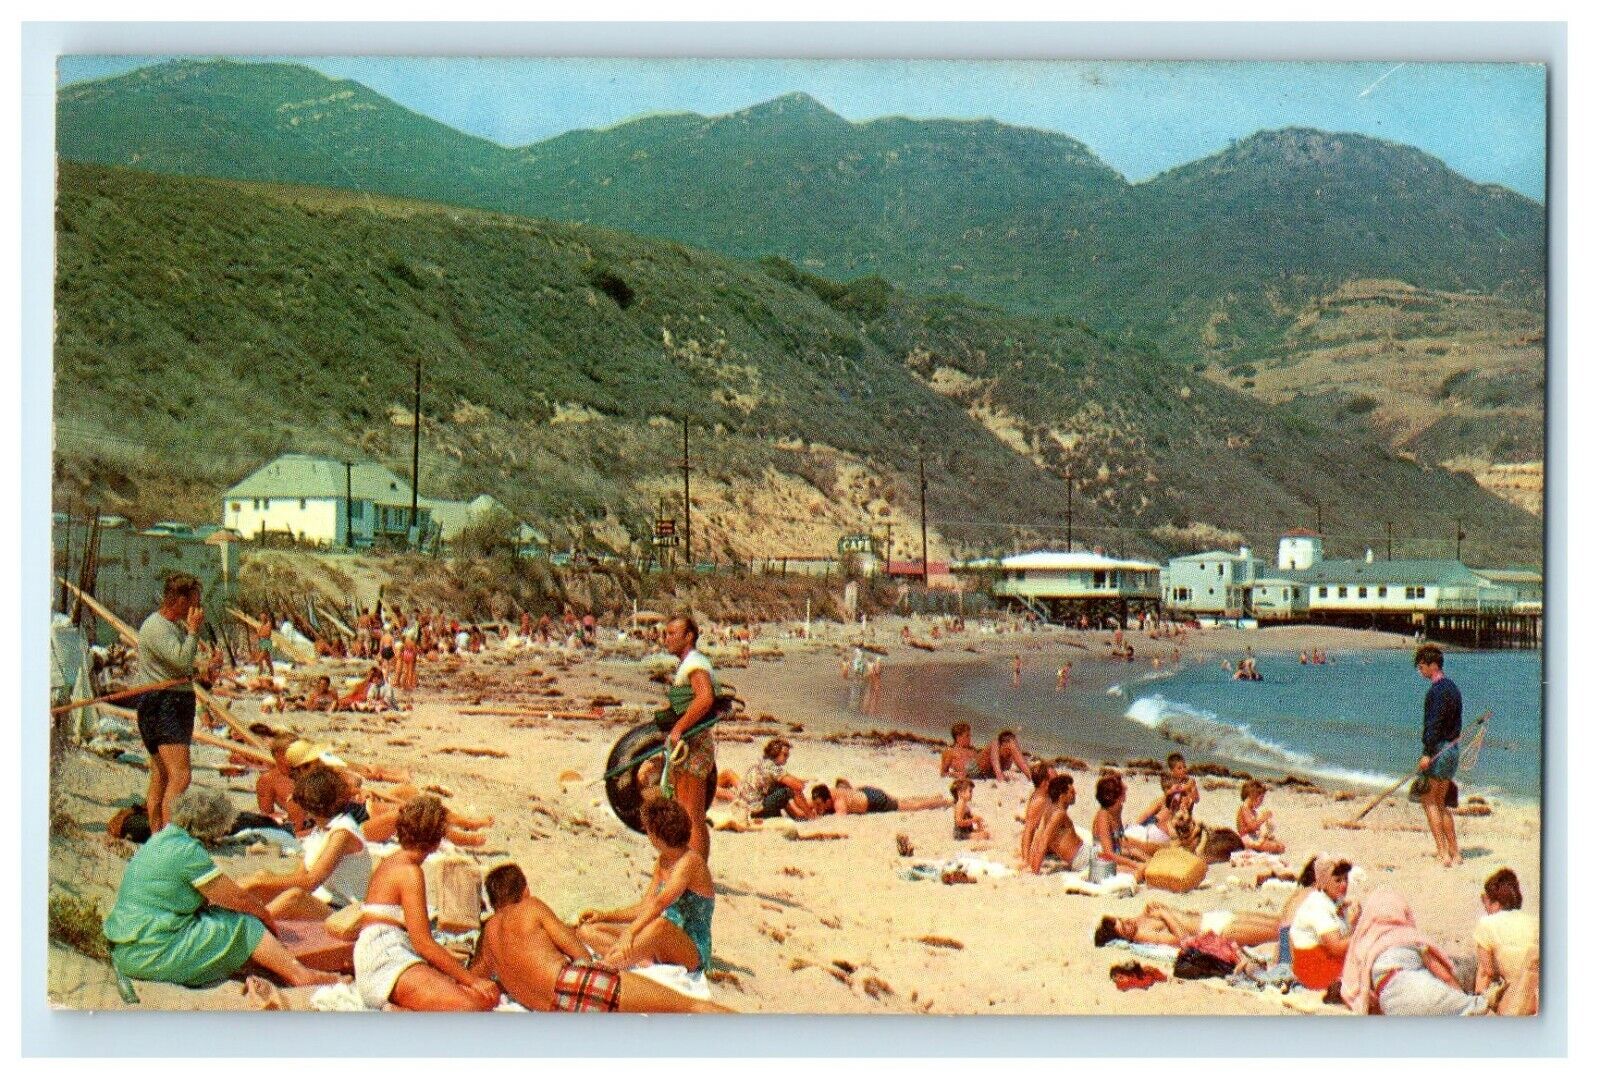 1953 Beach Crowd Enjoying Sun and Sand, Malibu, California CA Postcard